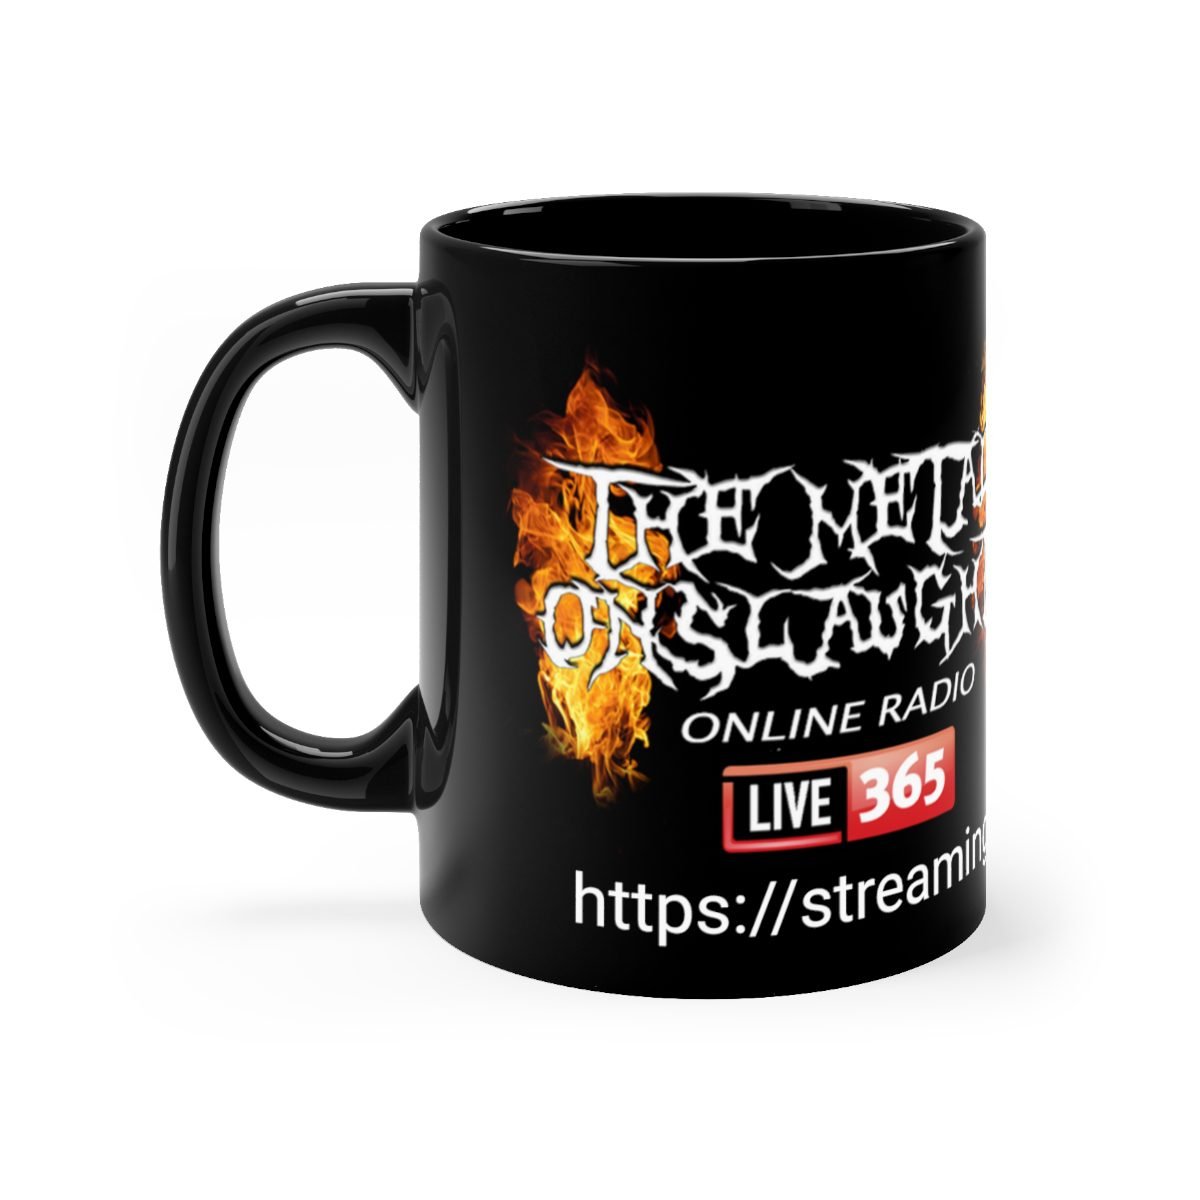 Personalized The Metal Onslaught Online Radio365 black mug 11oz